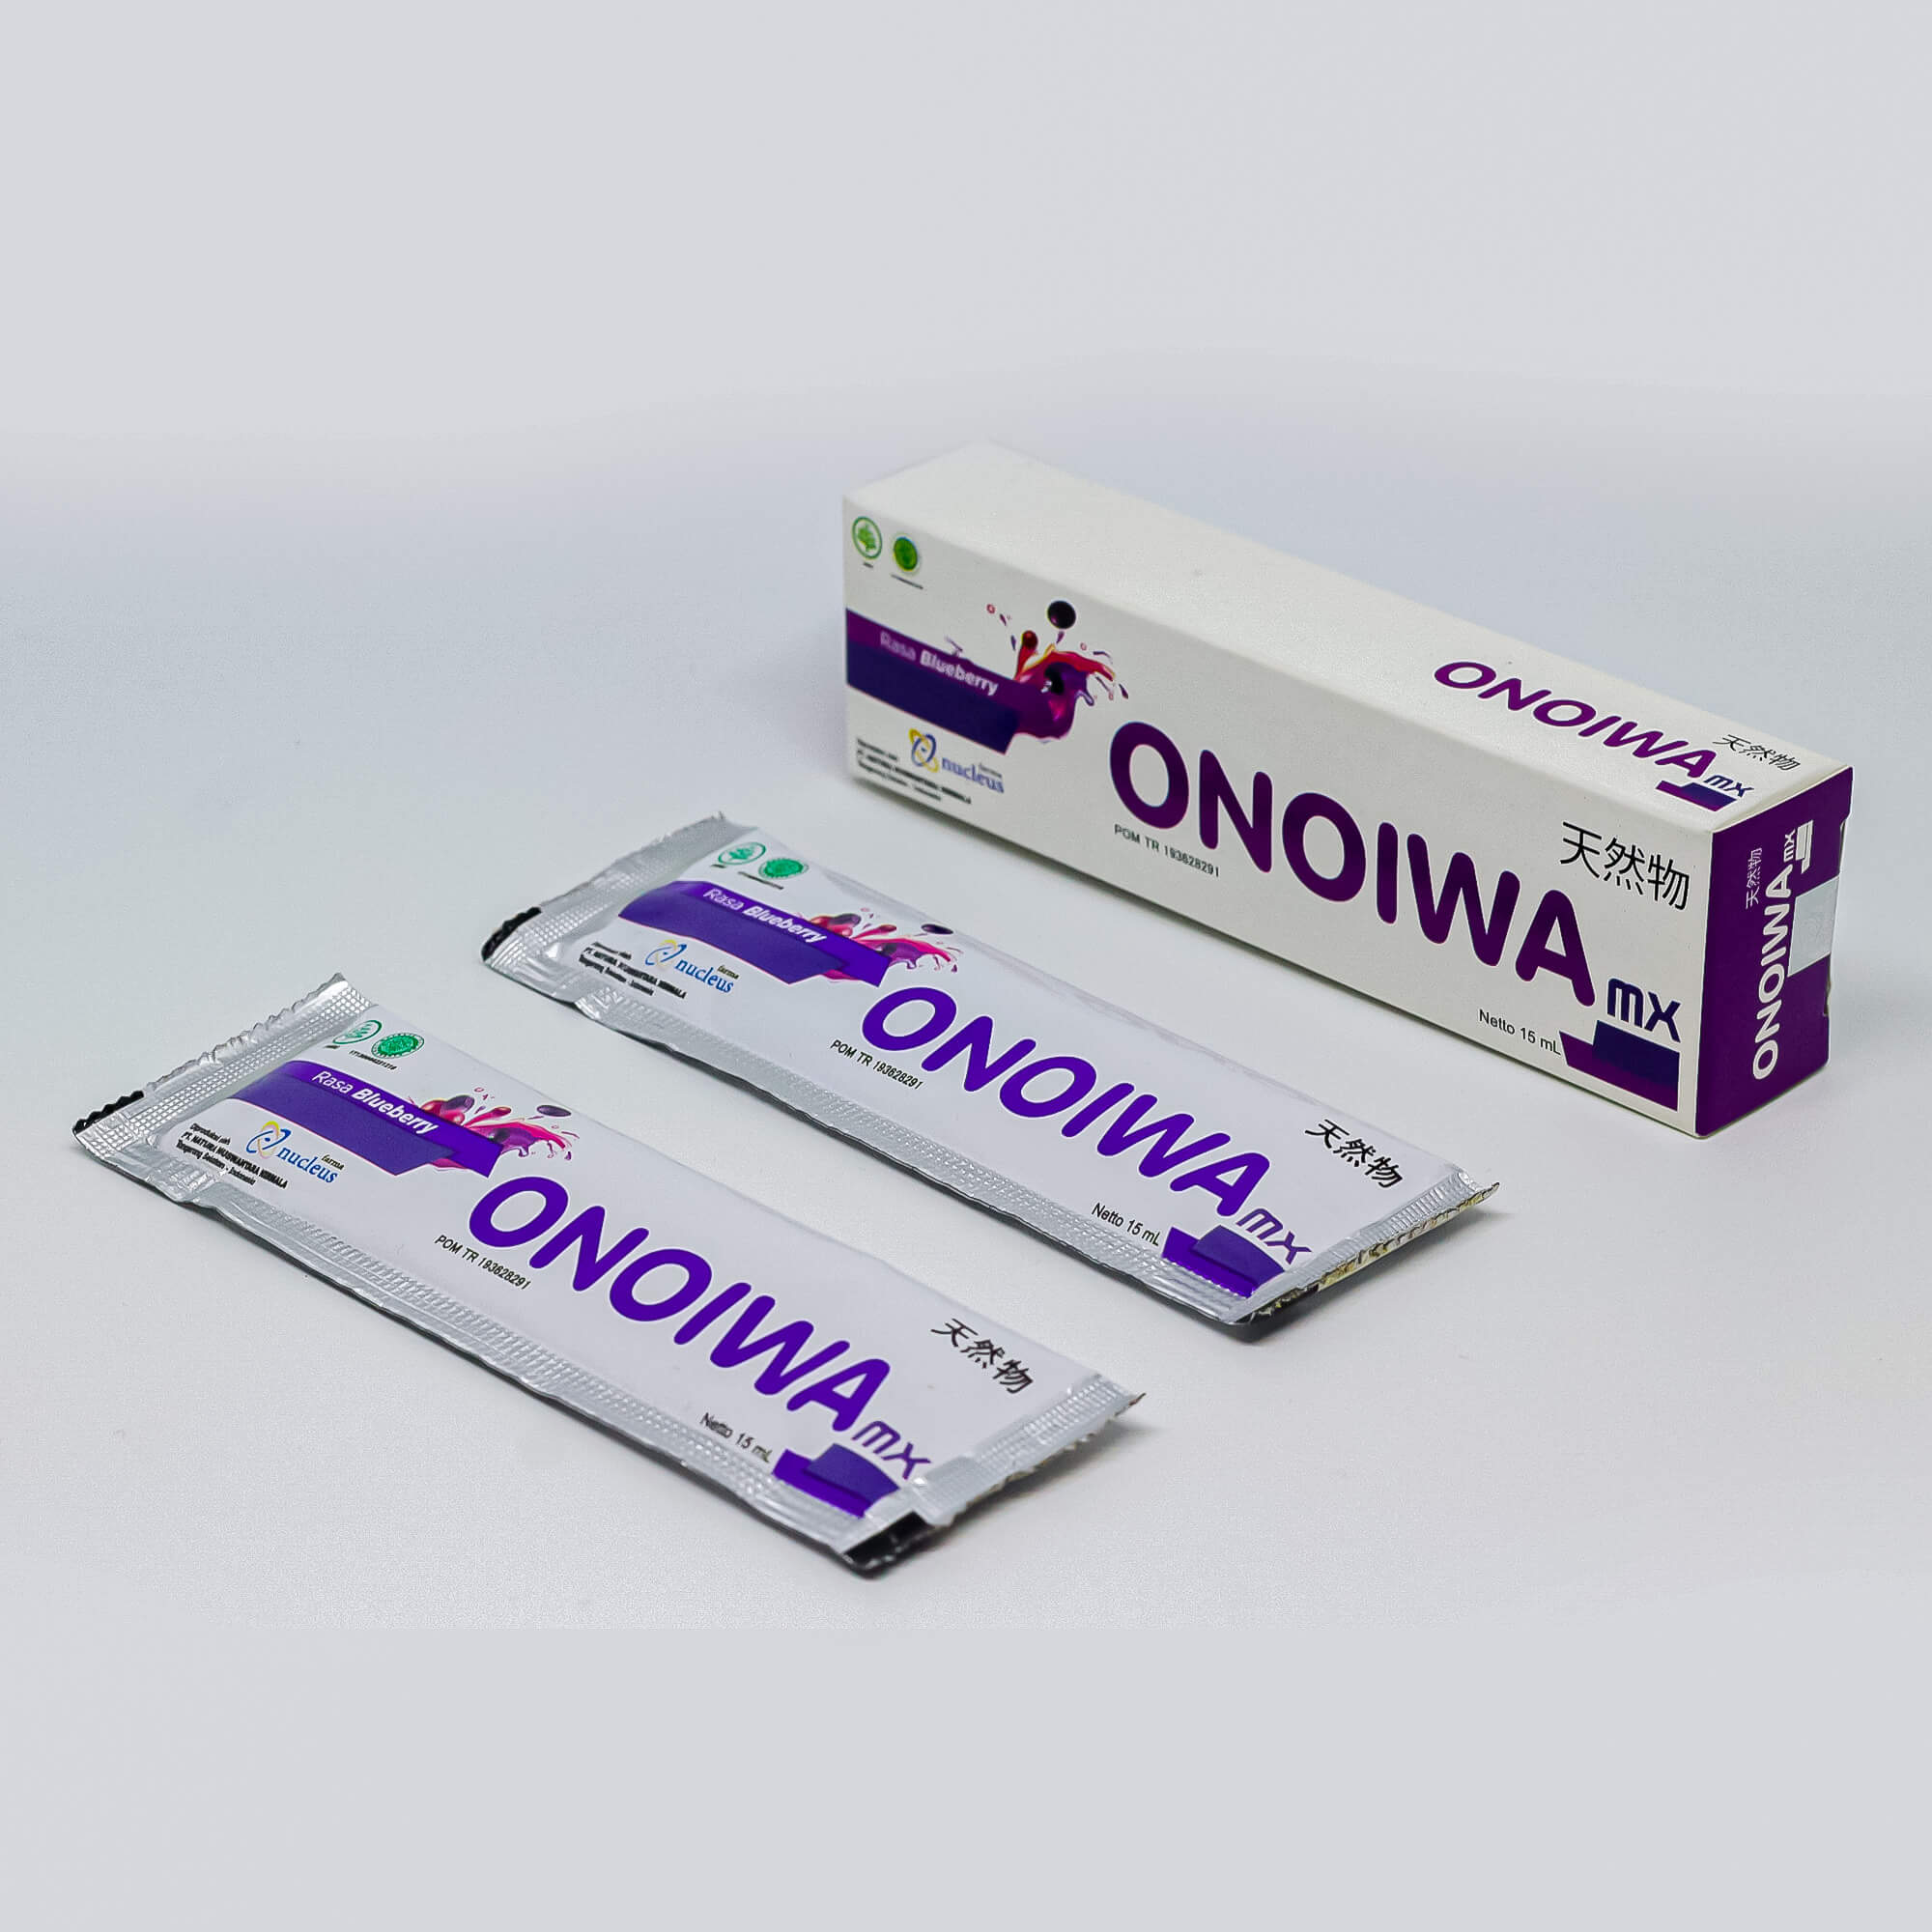 Onoiwa MX, Suplemen Herbal di Masa Pandemi